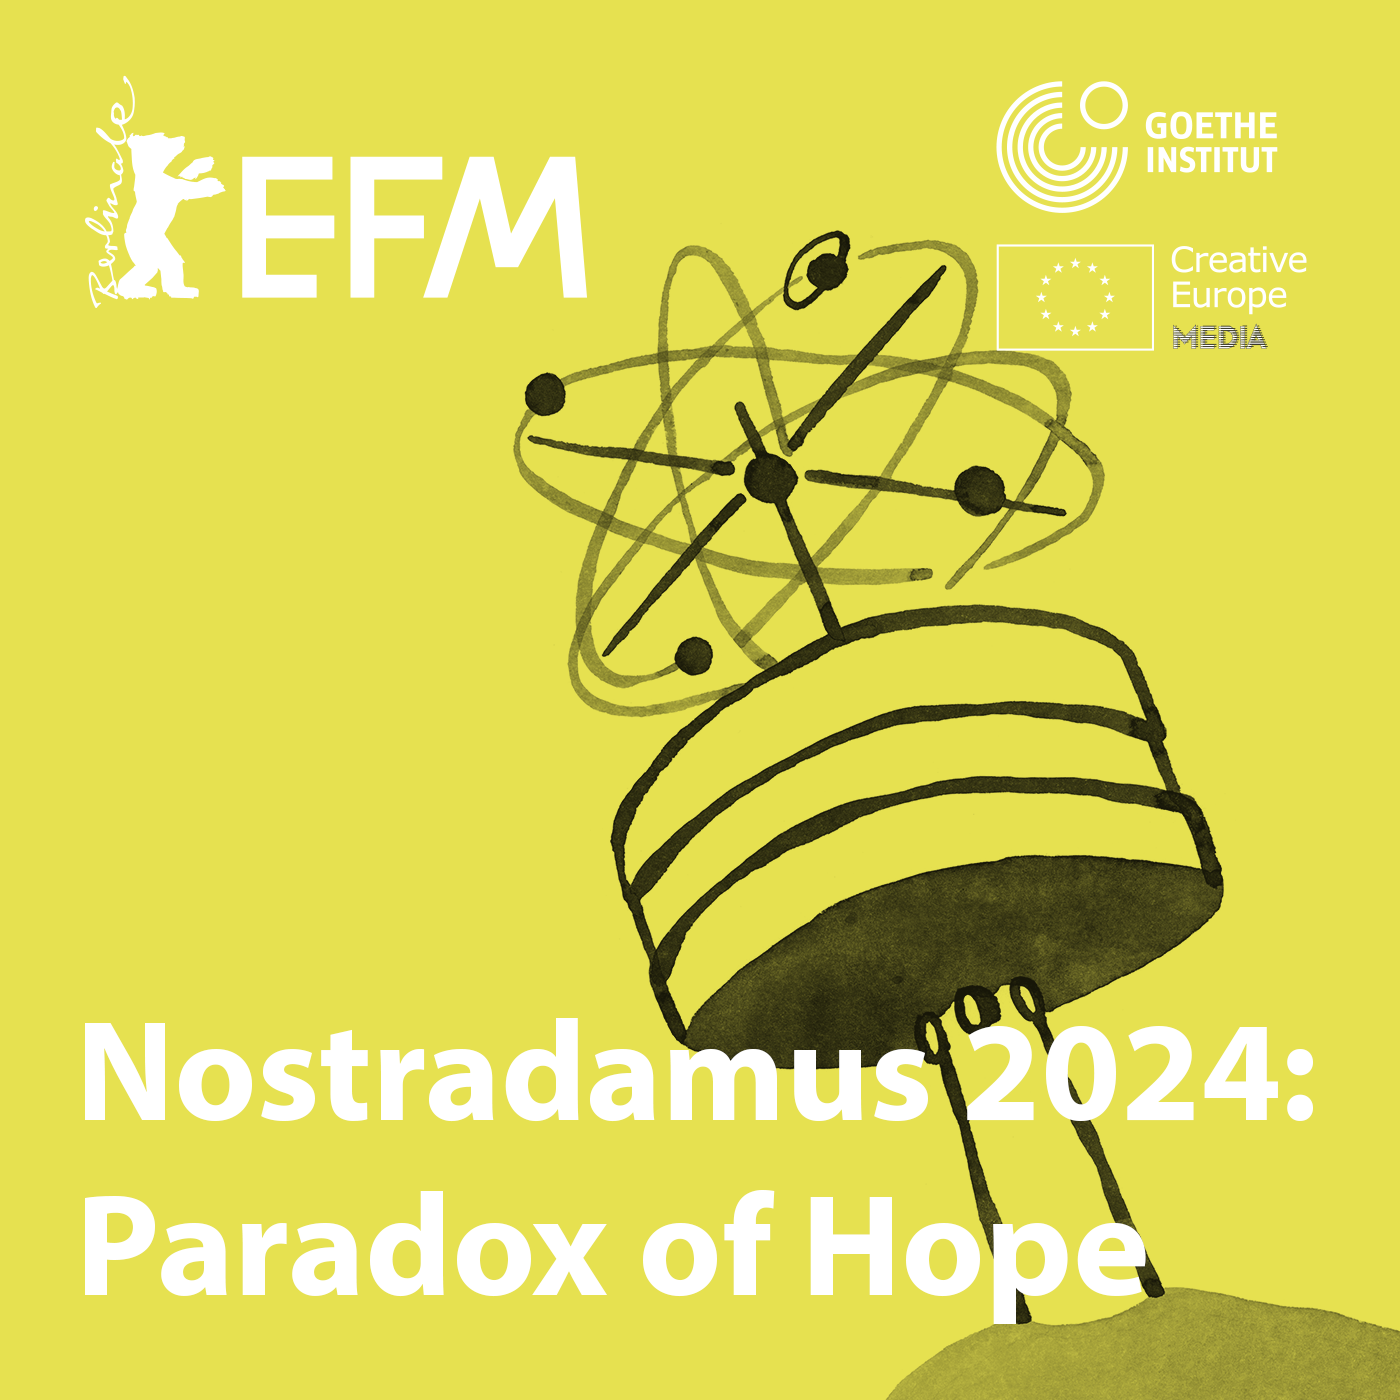 Nostradamus 2024: Paradox of Hope